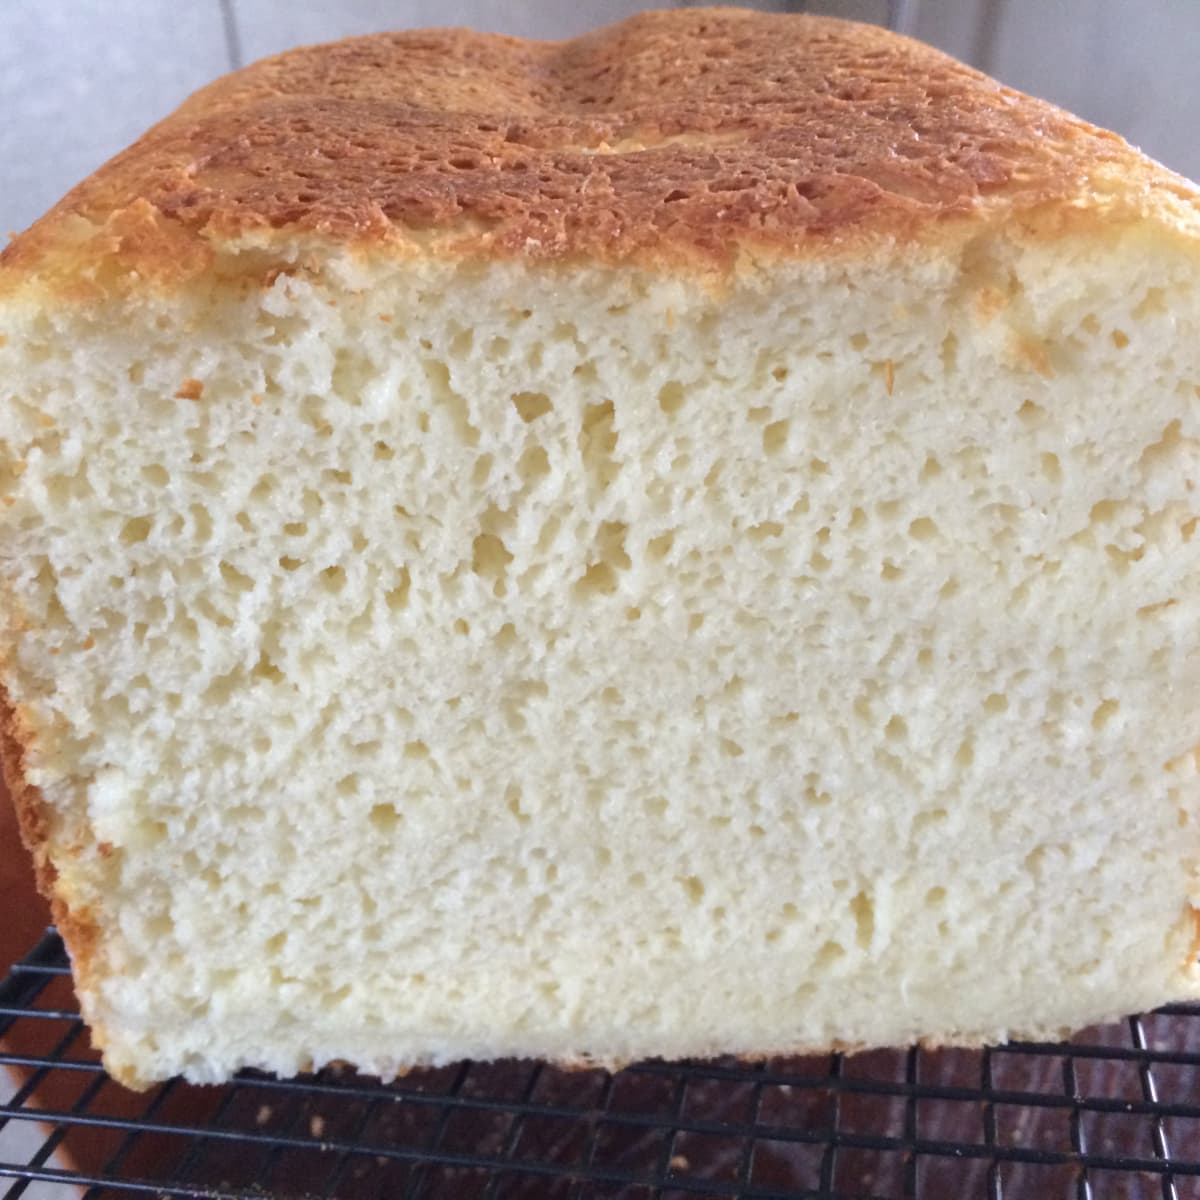 Easy Gluten-Free Bread Recipe (for an Oven or Bread Machine)